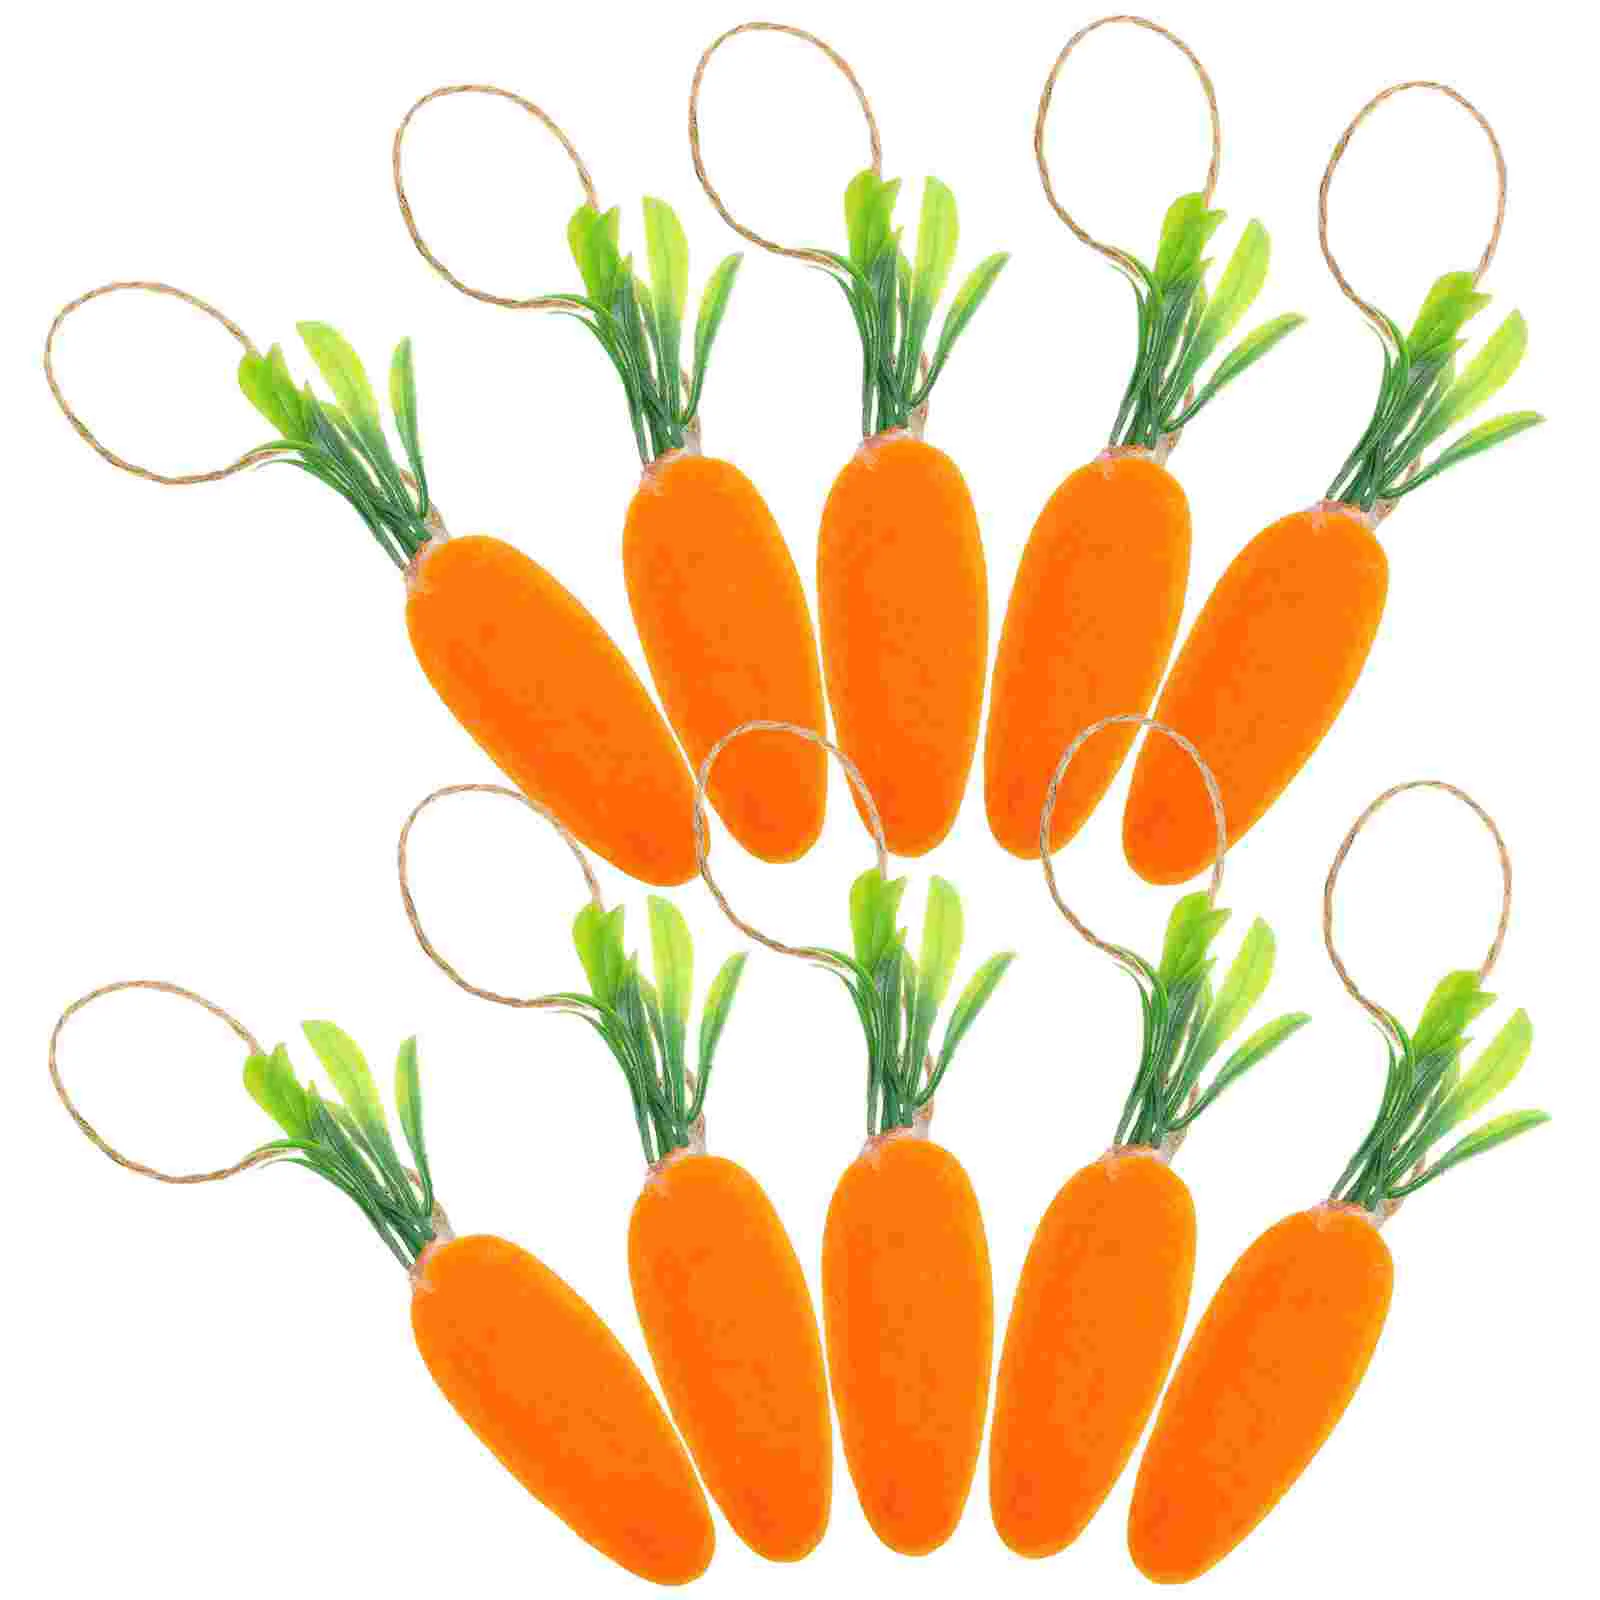 

10pcs Foams Delicate Decorative Scene Layout Props Hanging Carrot Ornament Simulation Carrot Pendants